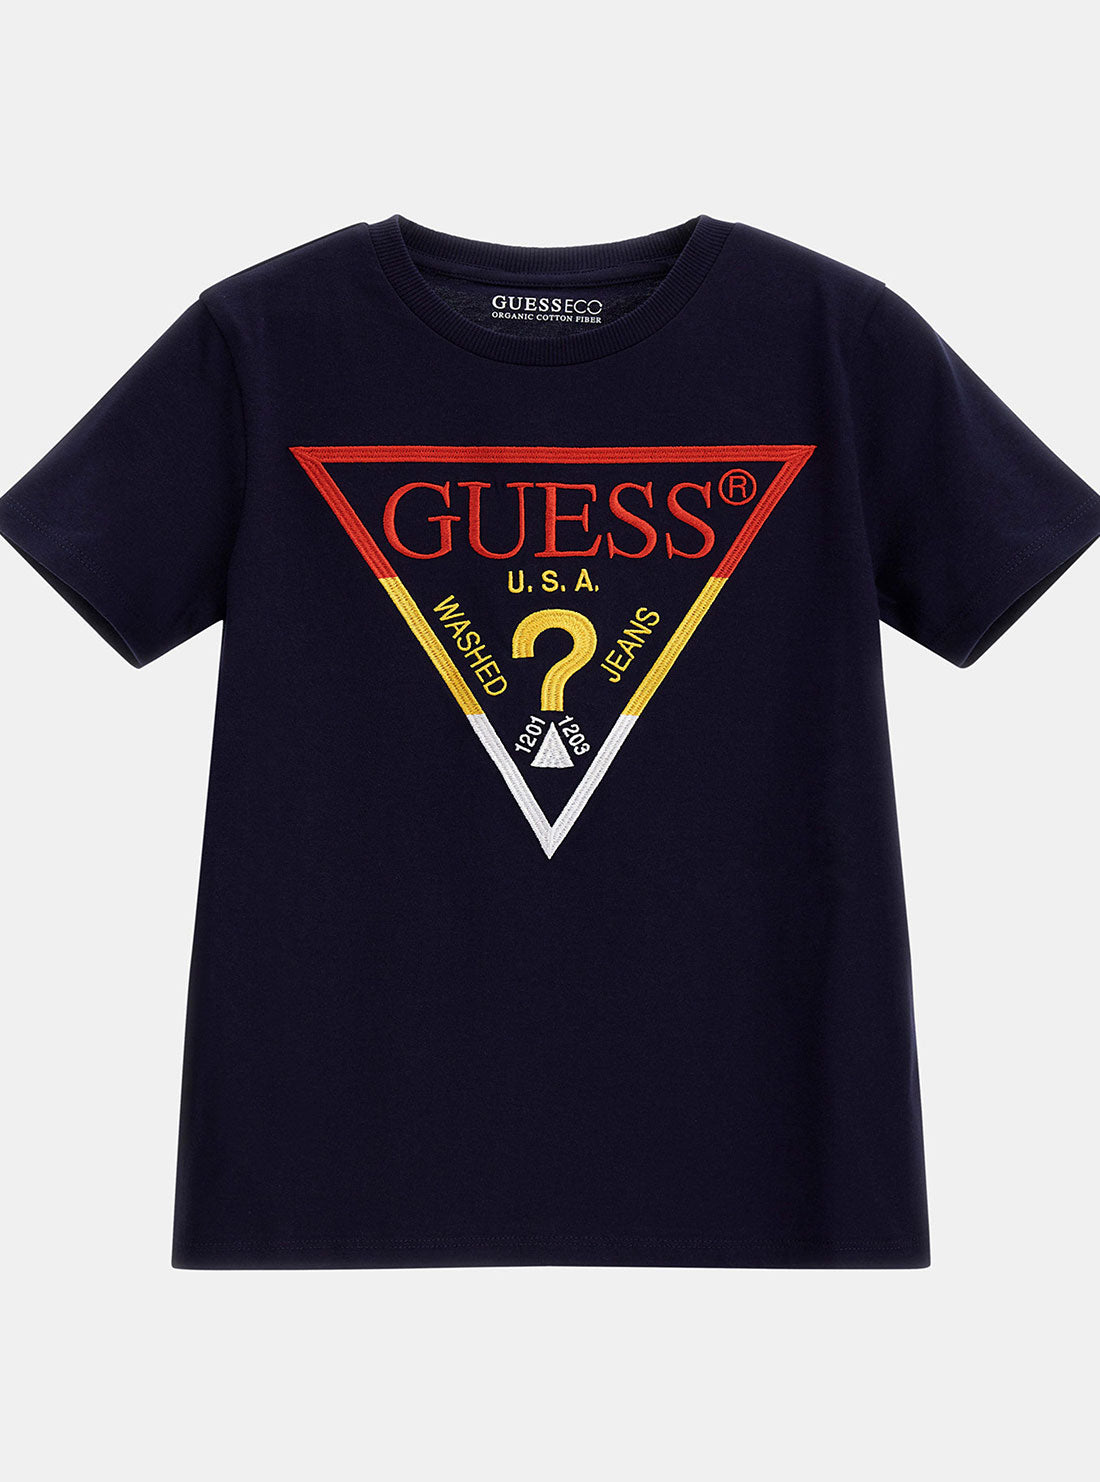 GUESS Navy Logo Short Sleeve T-Shirt (8-16) front view